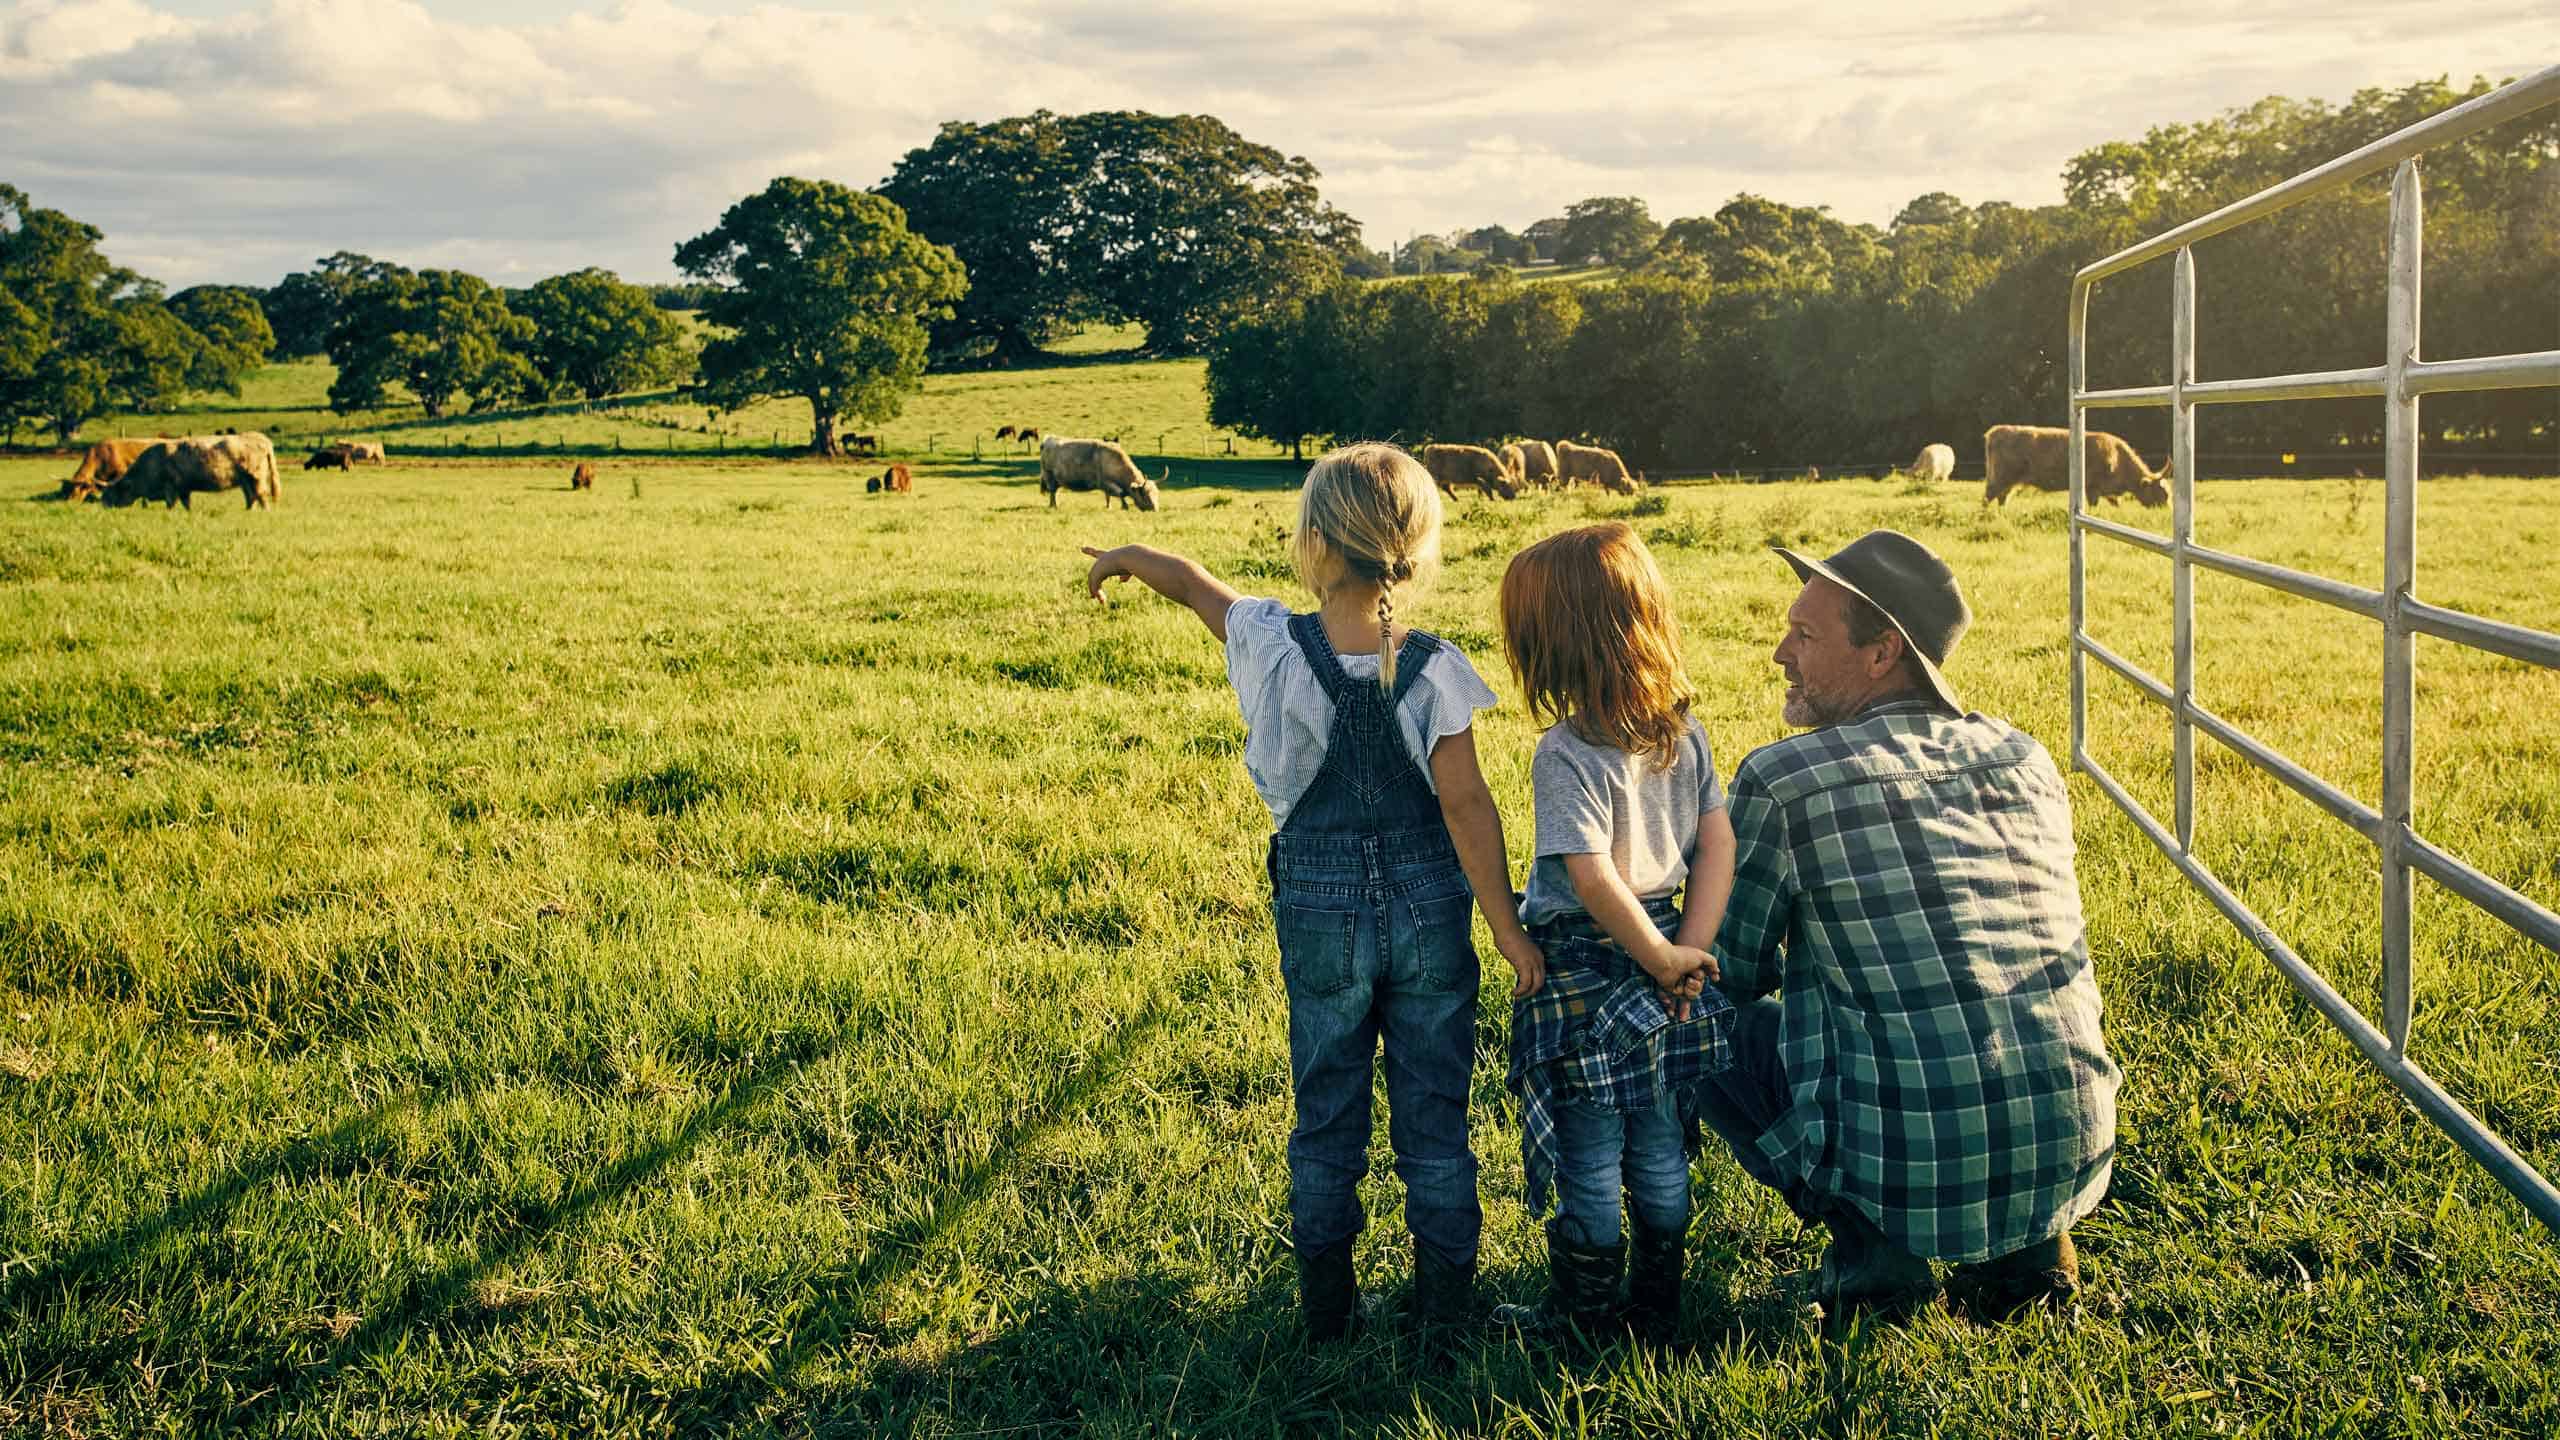 Man with children in cow field